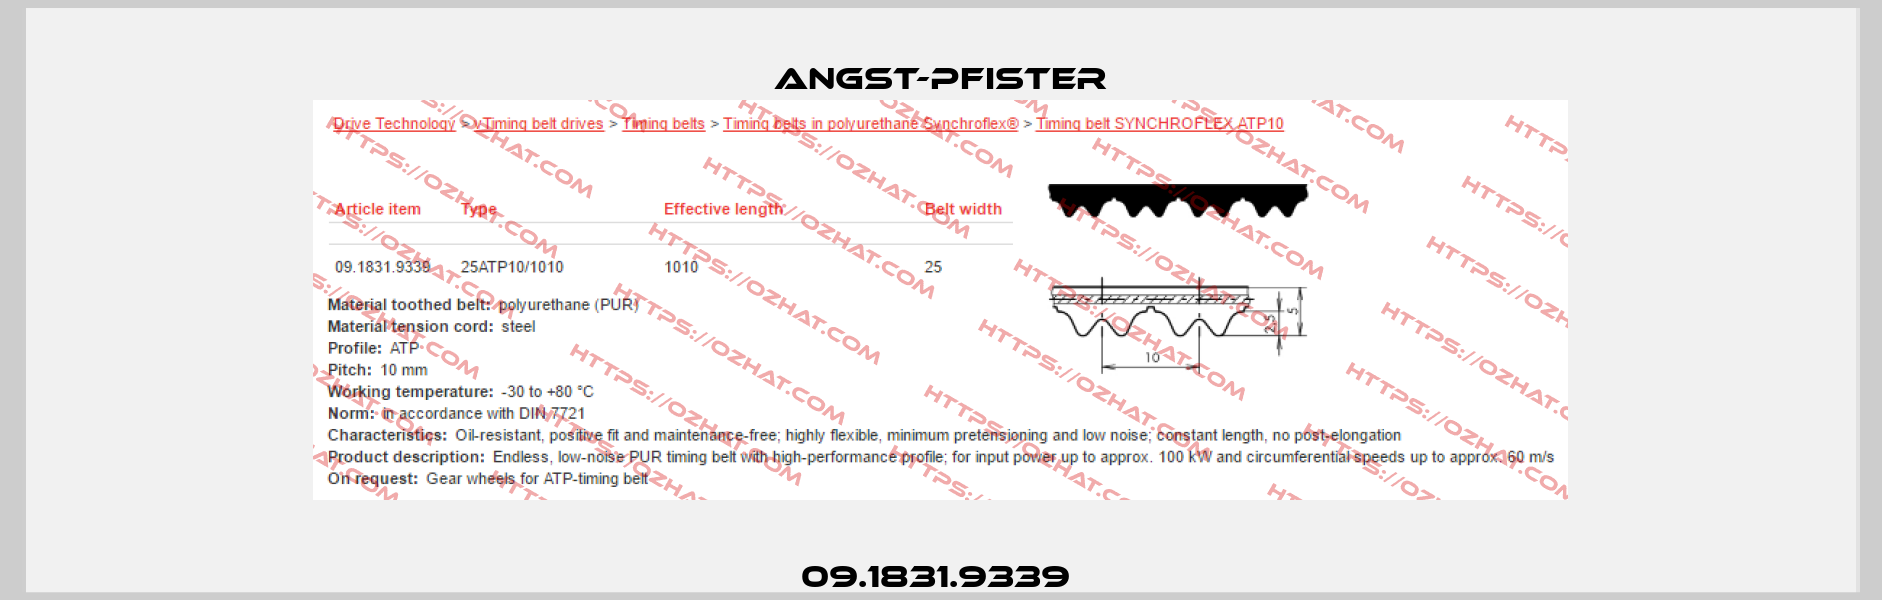 09.1831.9339  Angst-Pfister